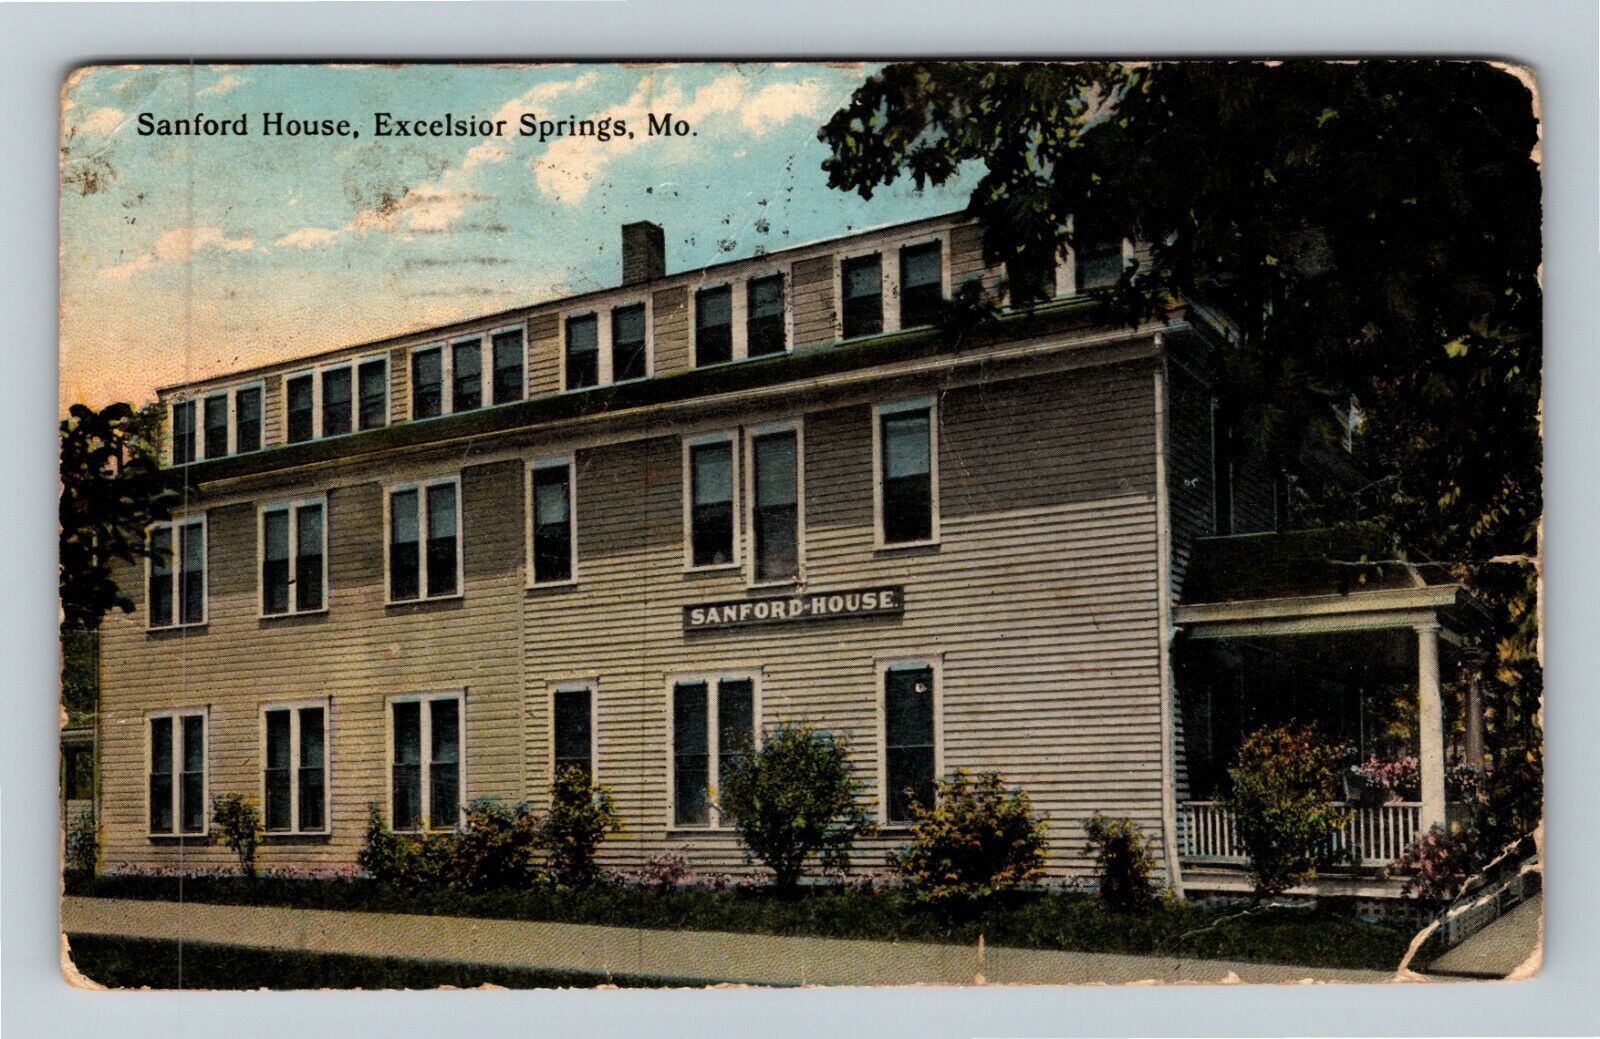 Excelsior Springs Missouri, Sanford House Hotel Adverting c1915 Vintage Postcard